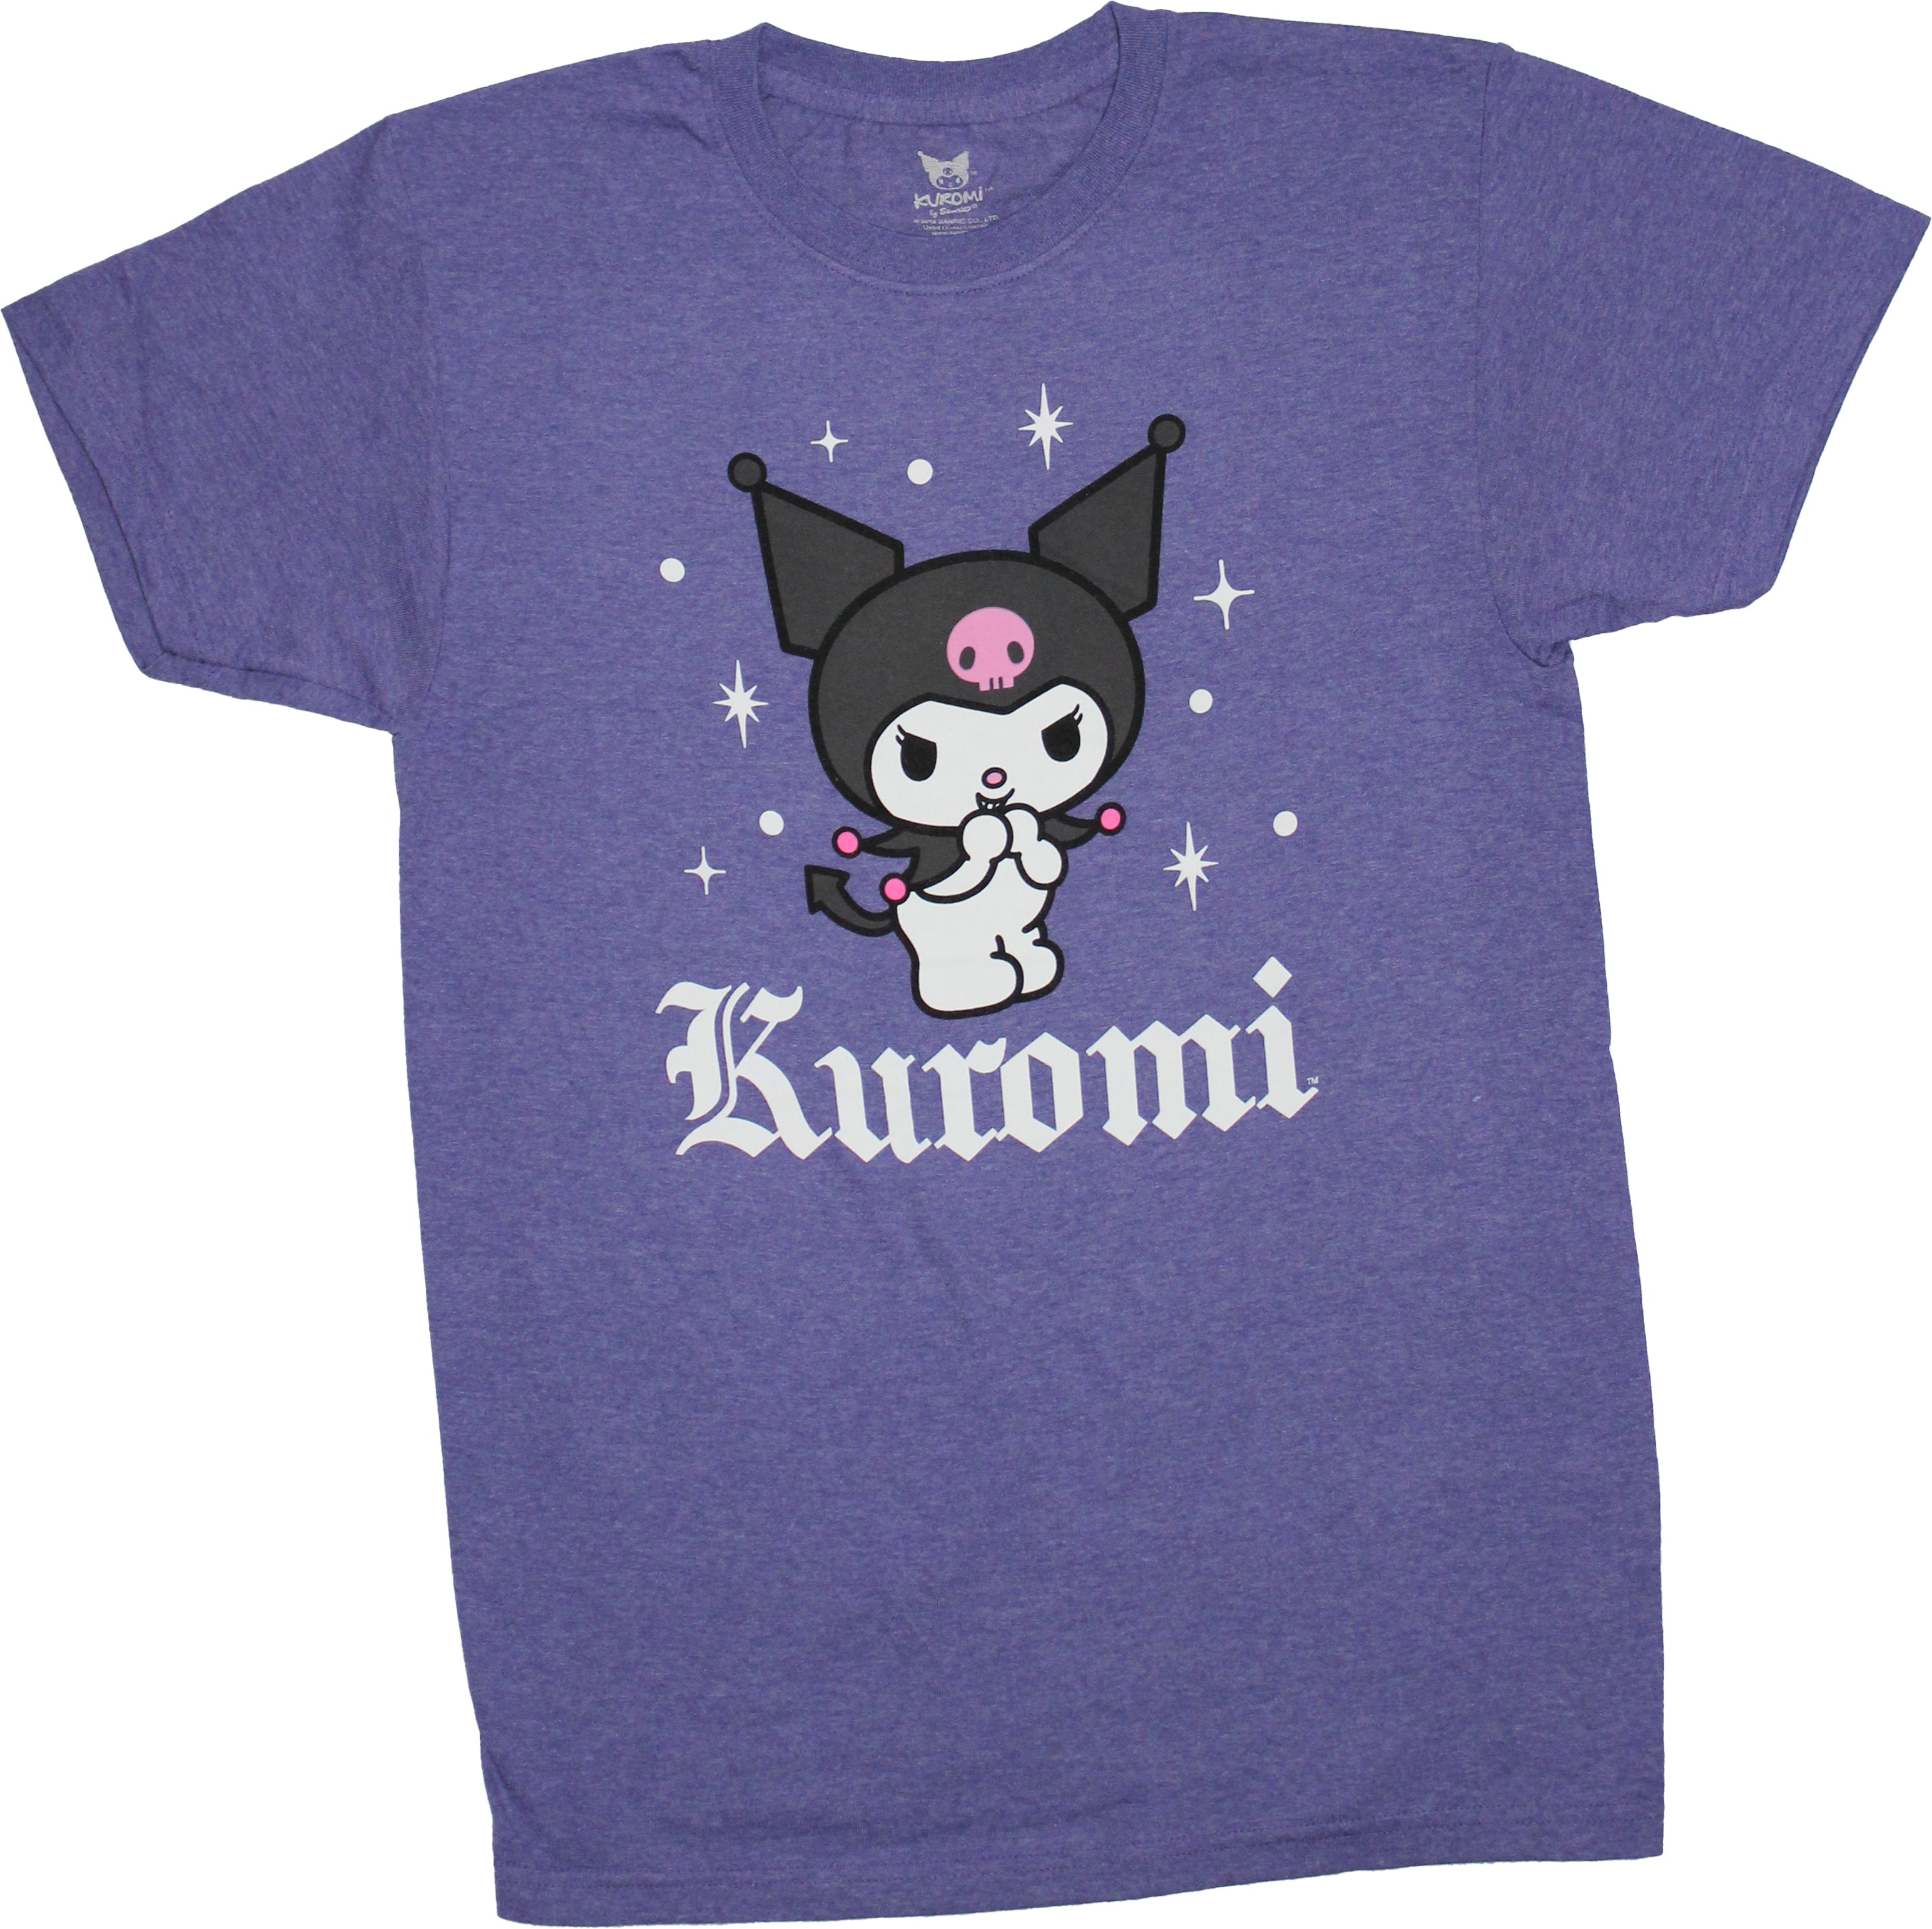 Kuromi Mens T-Shirt - Grinning Amongst Stars Over Name